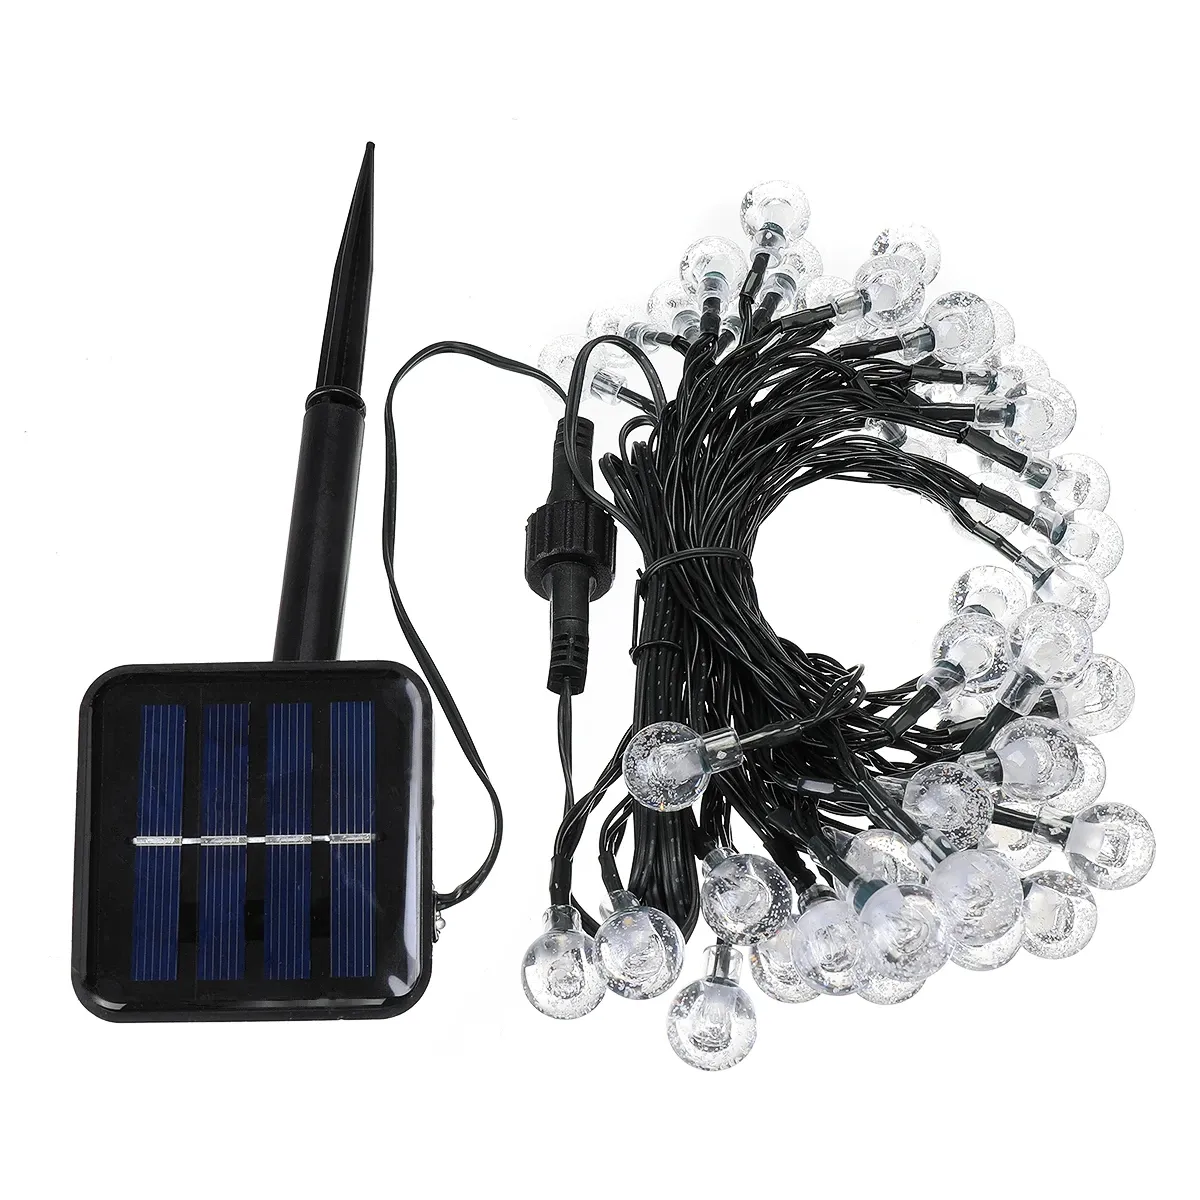 9.5m USB+Solar Powered 50 LED String Light Outdoor Garden Path Yard Lampe de décoration étanche - Blanc